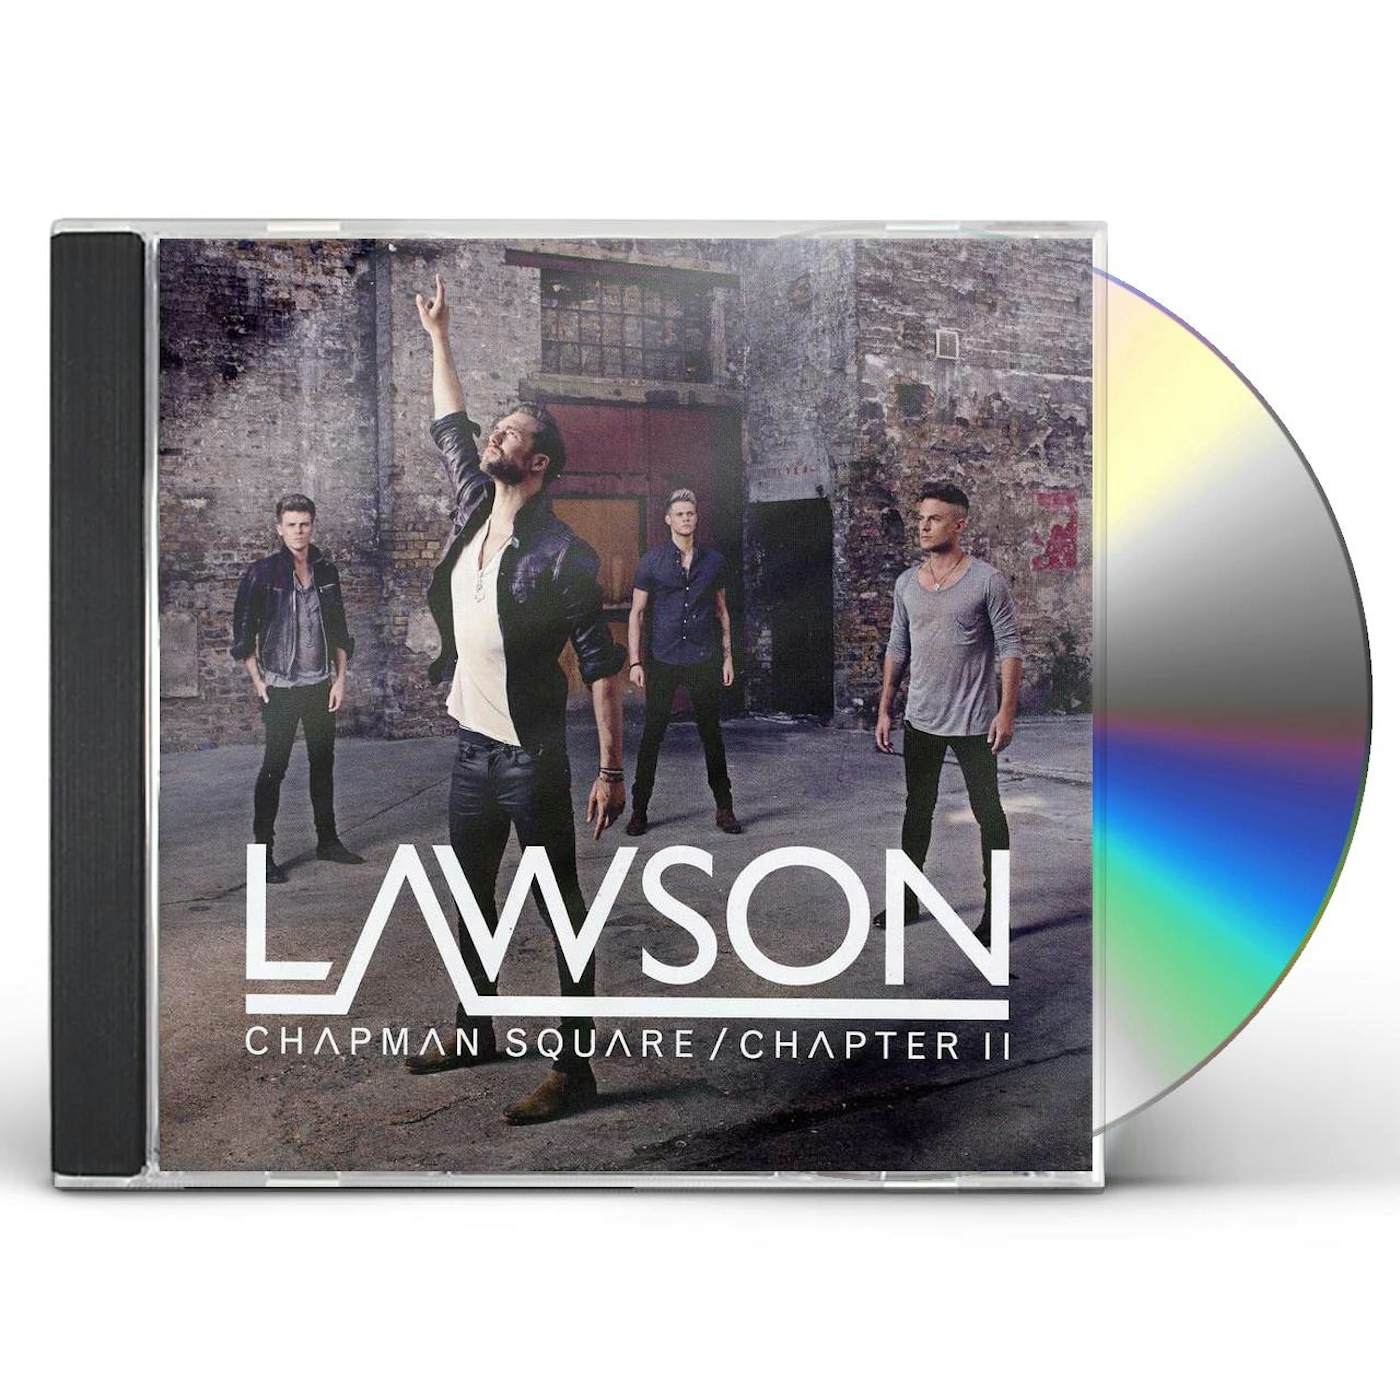 Lawson CHAPMAN SQUARE CHAPTER II CD